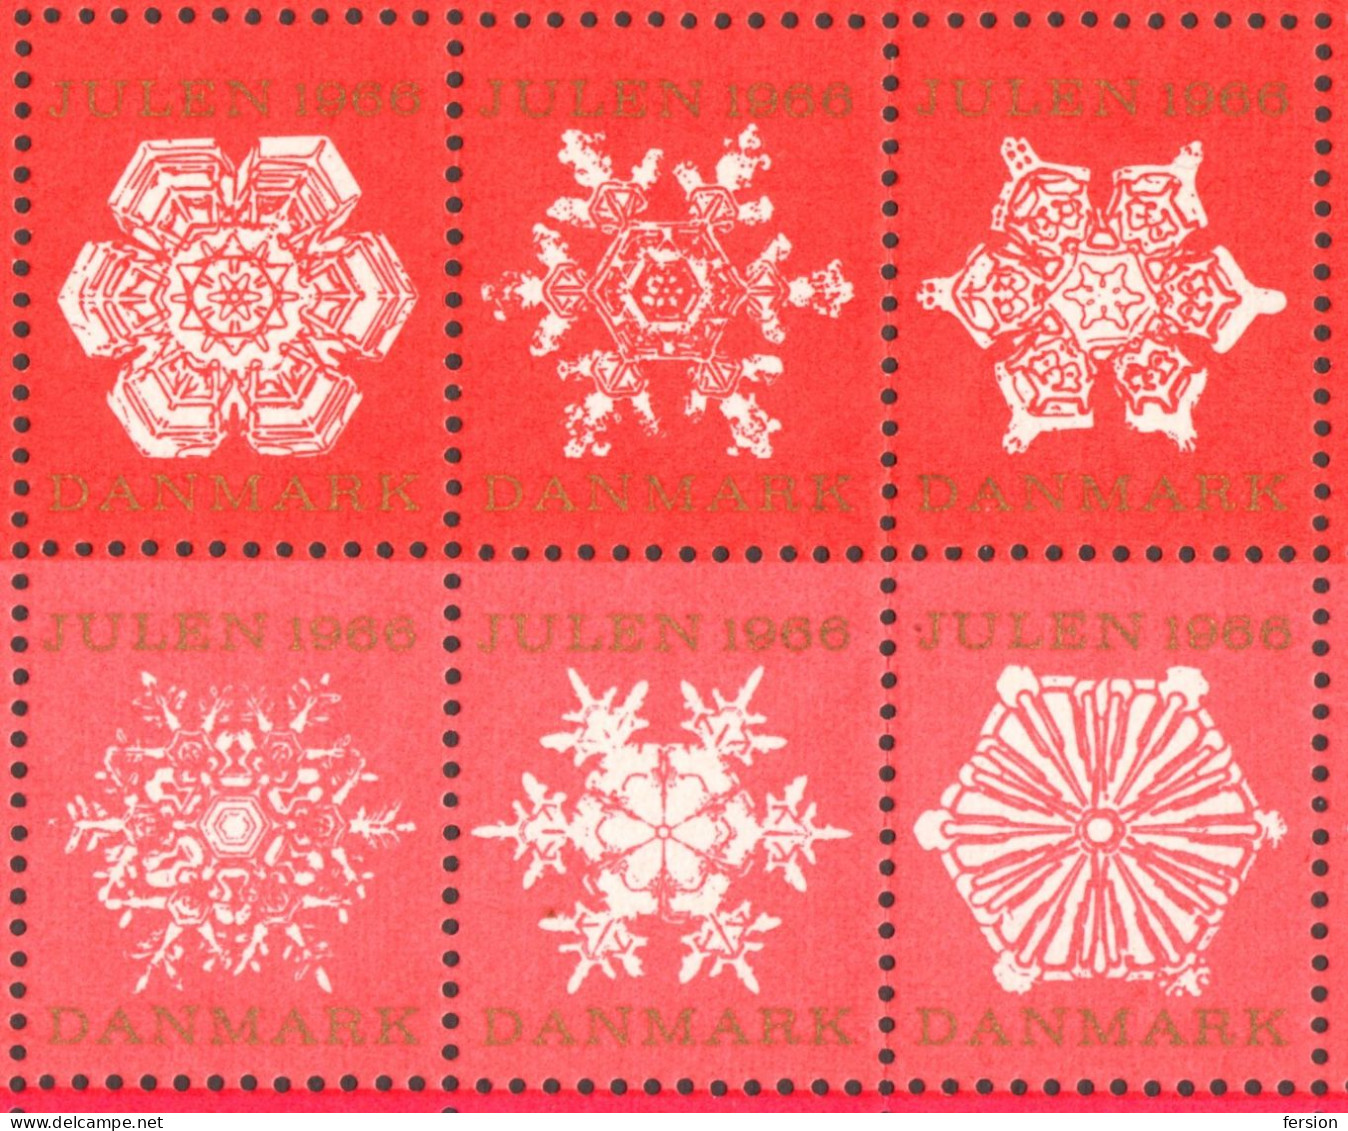 snowflake snow - Christmas - JUL - LABEL / CINDERELLA / VIGNETTE - 1966 Denmark Danmark - MNH sheet